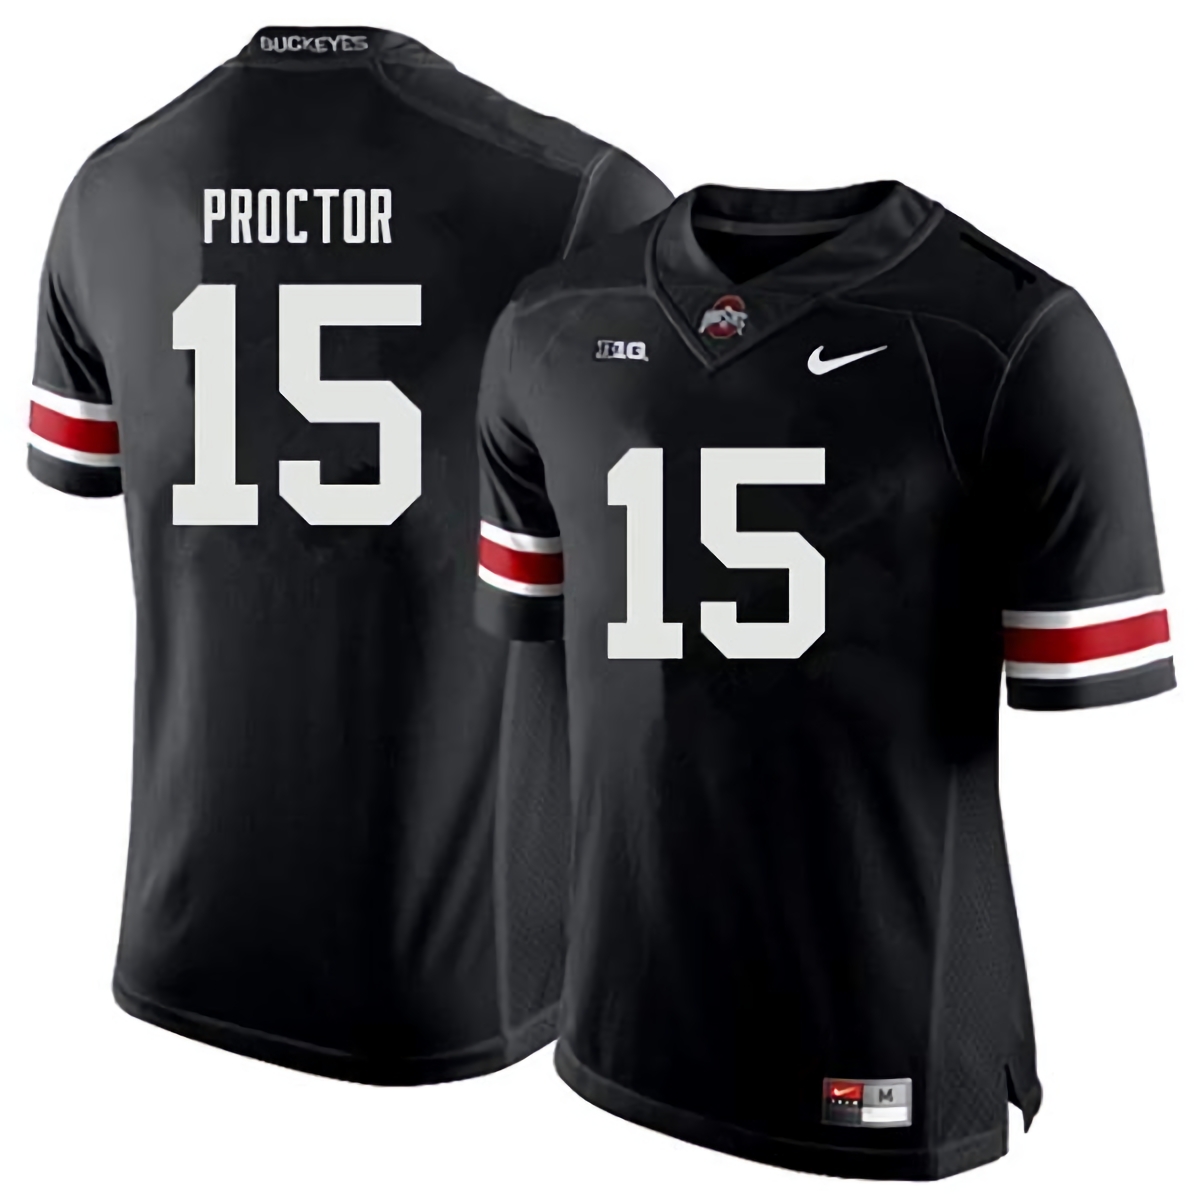 Josh Proctor Ohio State Buckeyes Men's NCAA #15 Nike Black College Stitched Football Jersey JLR8656VB